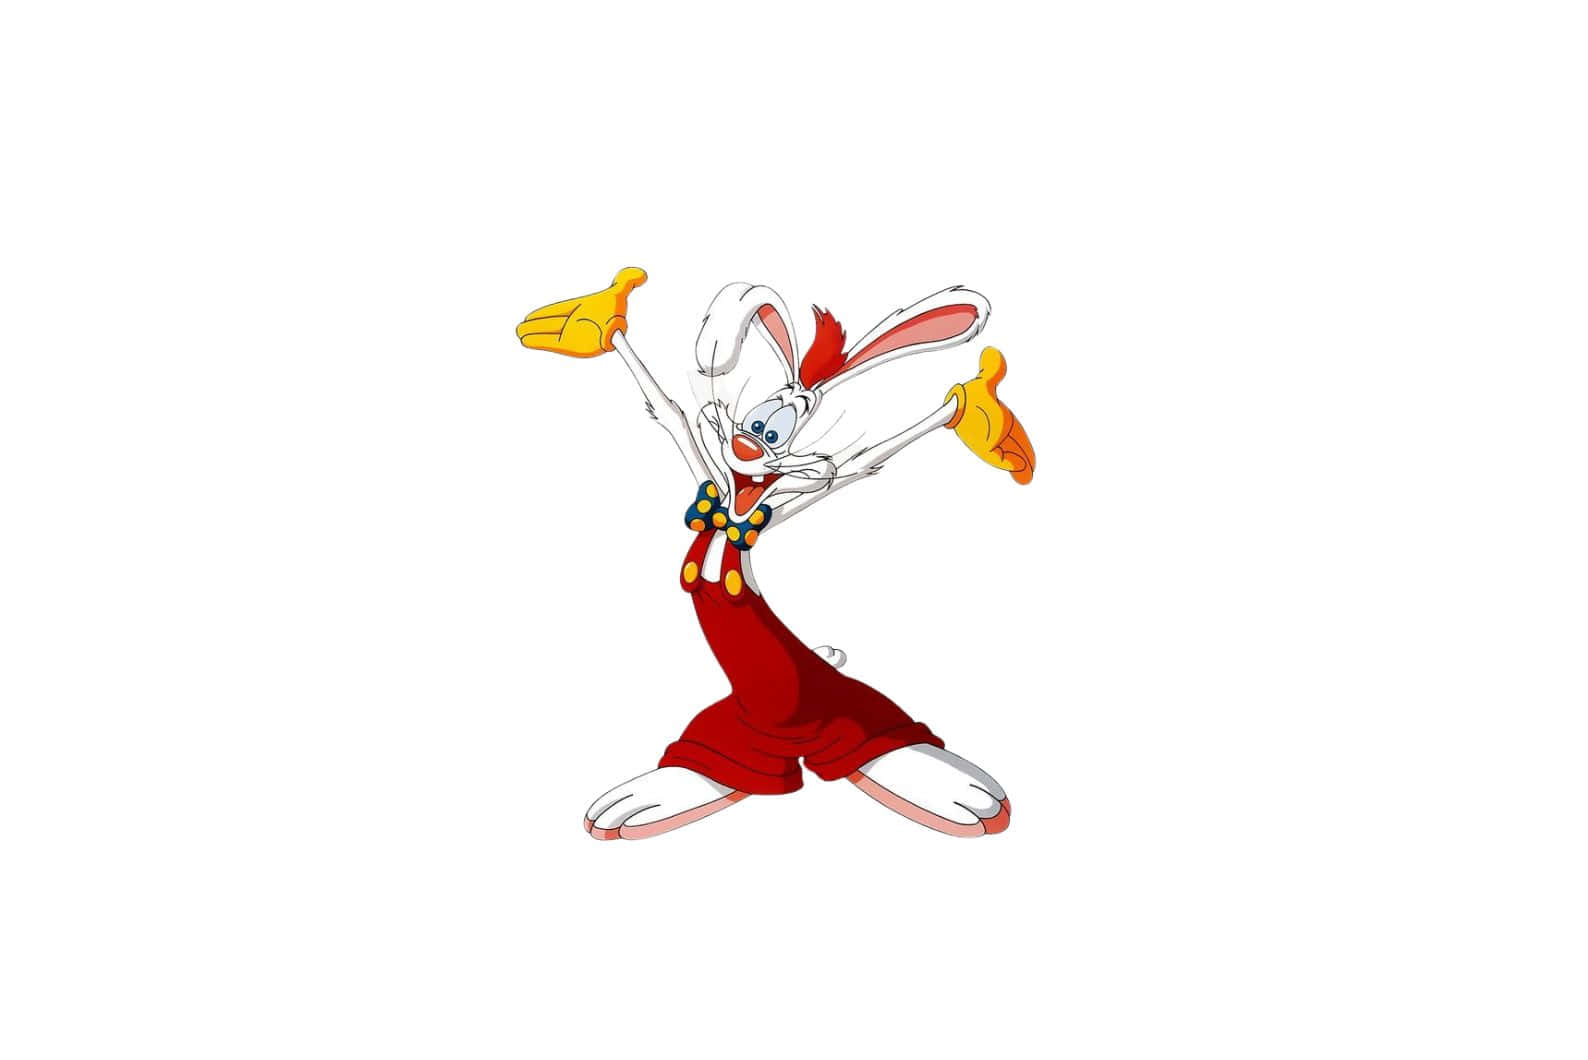 Roger Rabbit Cartoon Character Jumping Background